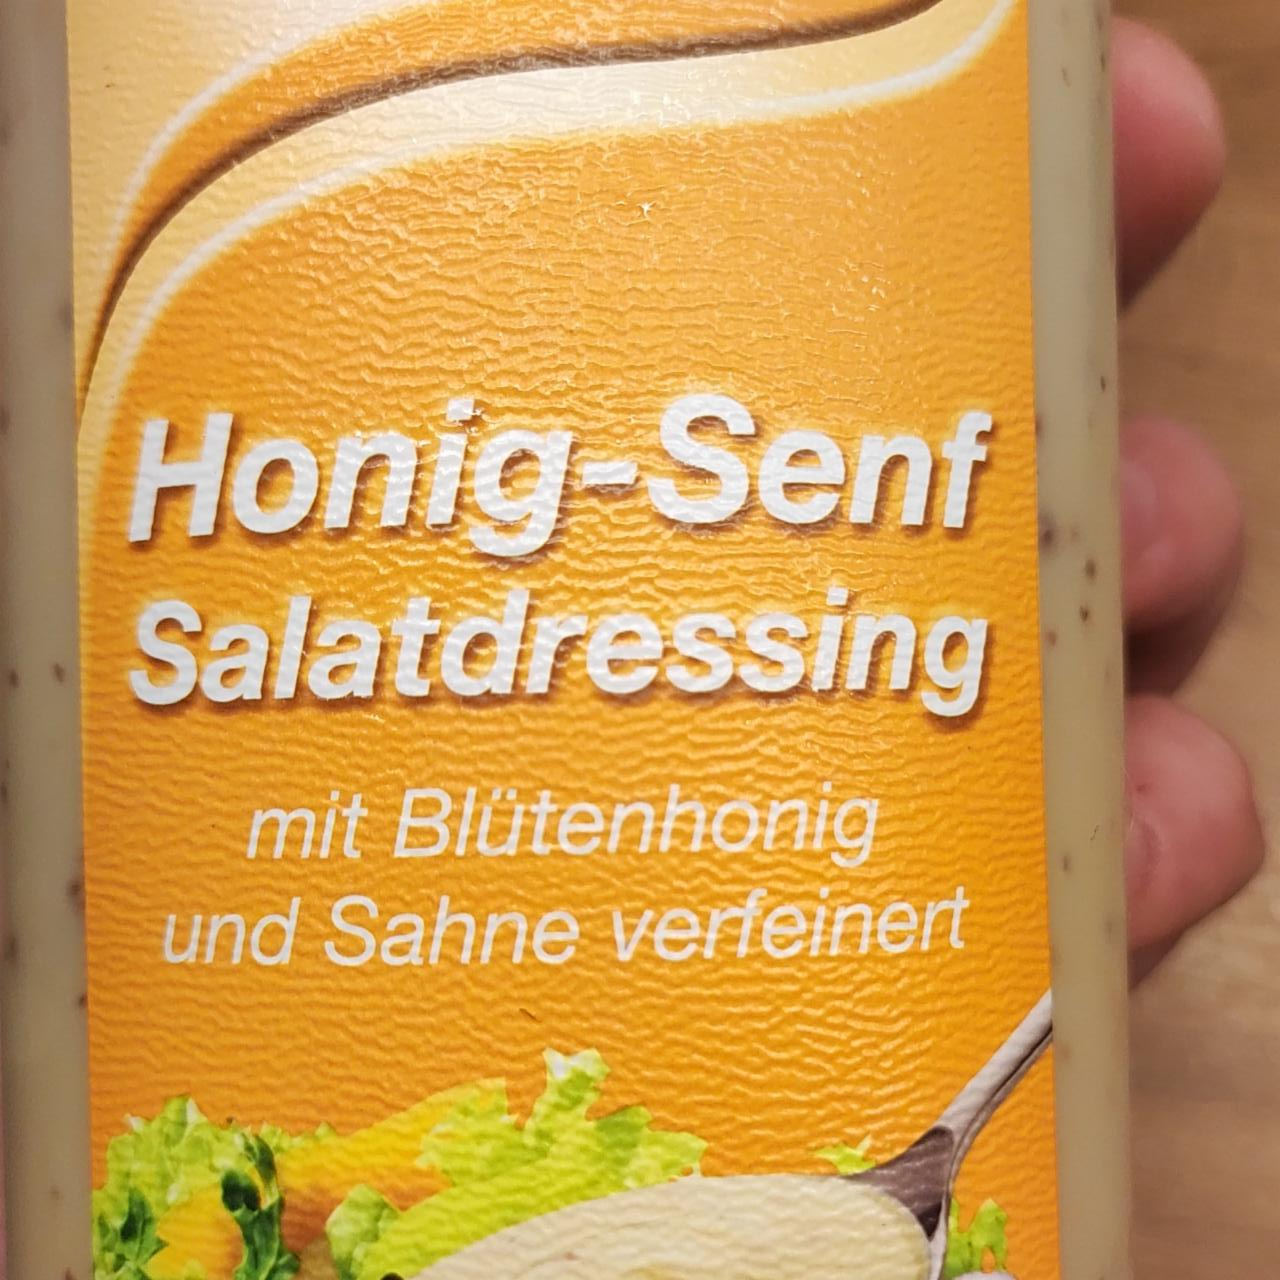 Fotografie - honing-senf salatdressing Homann